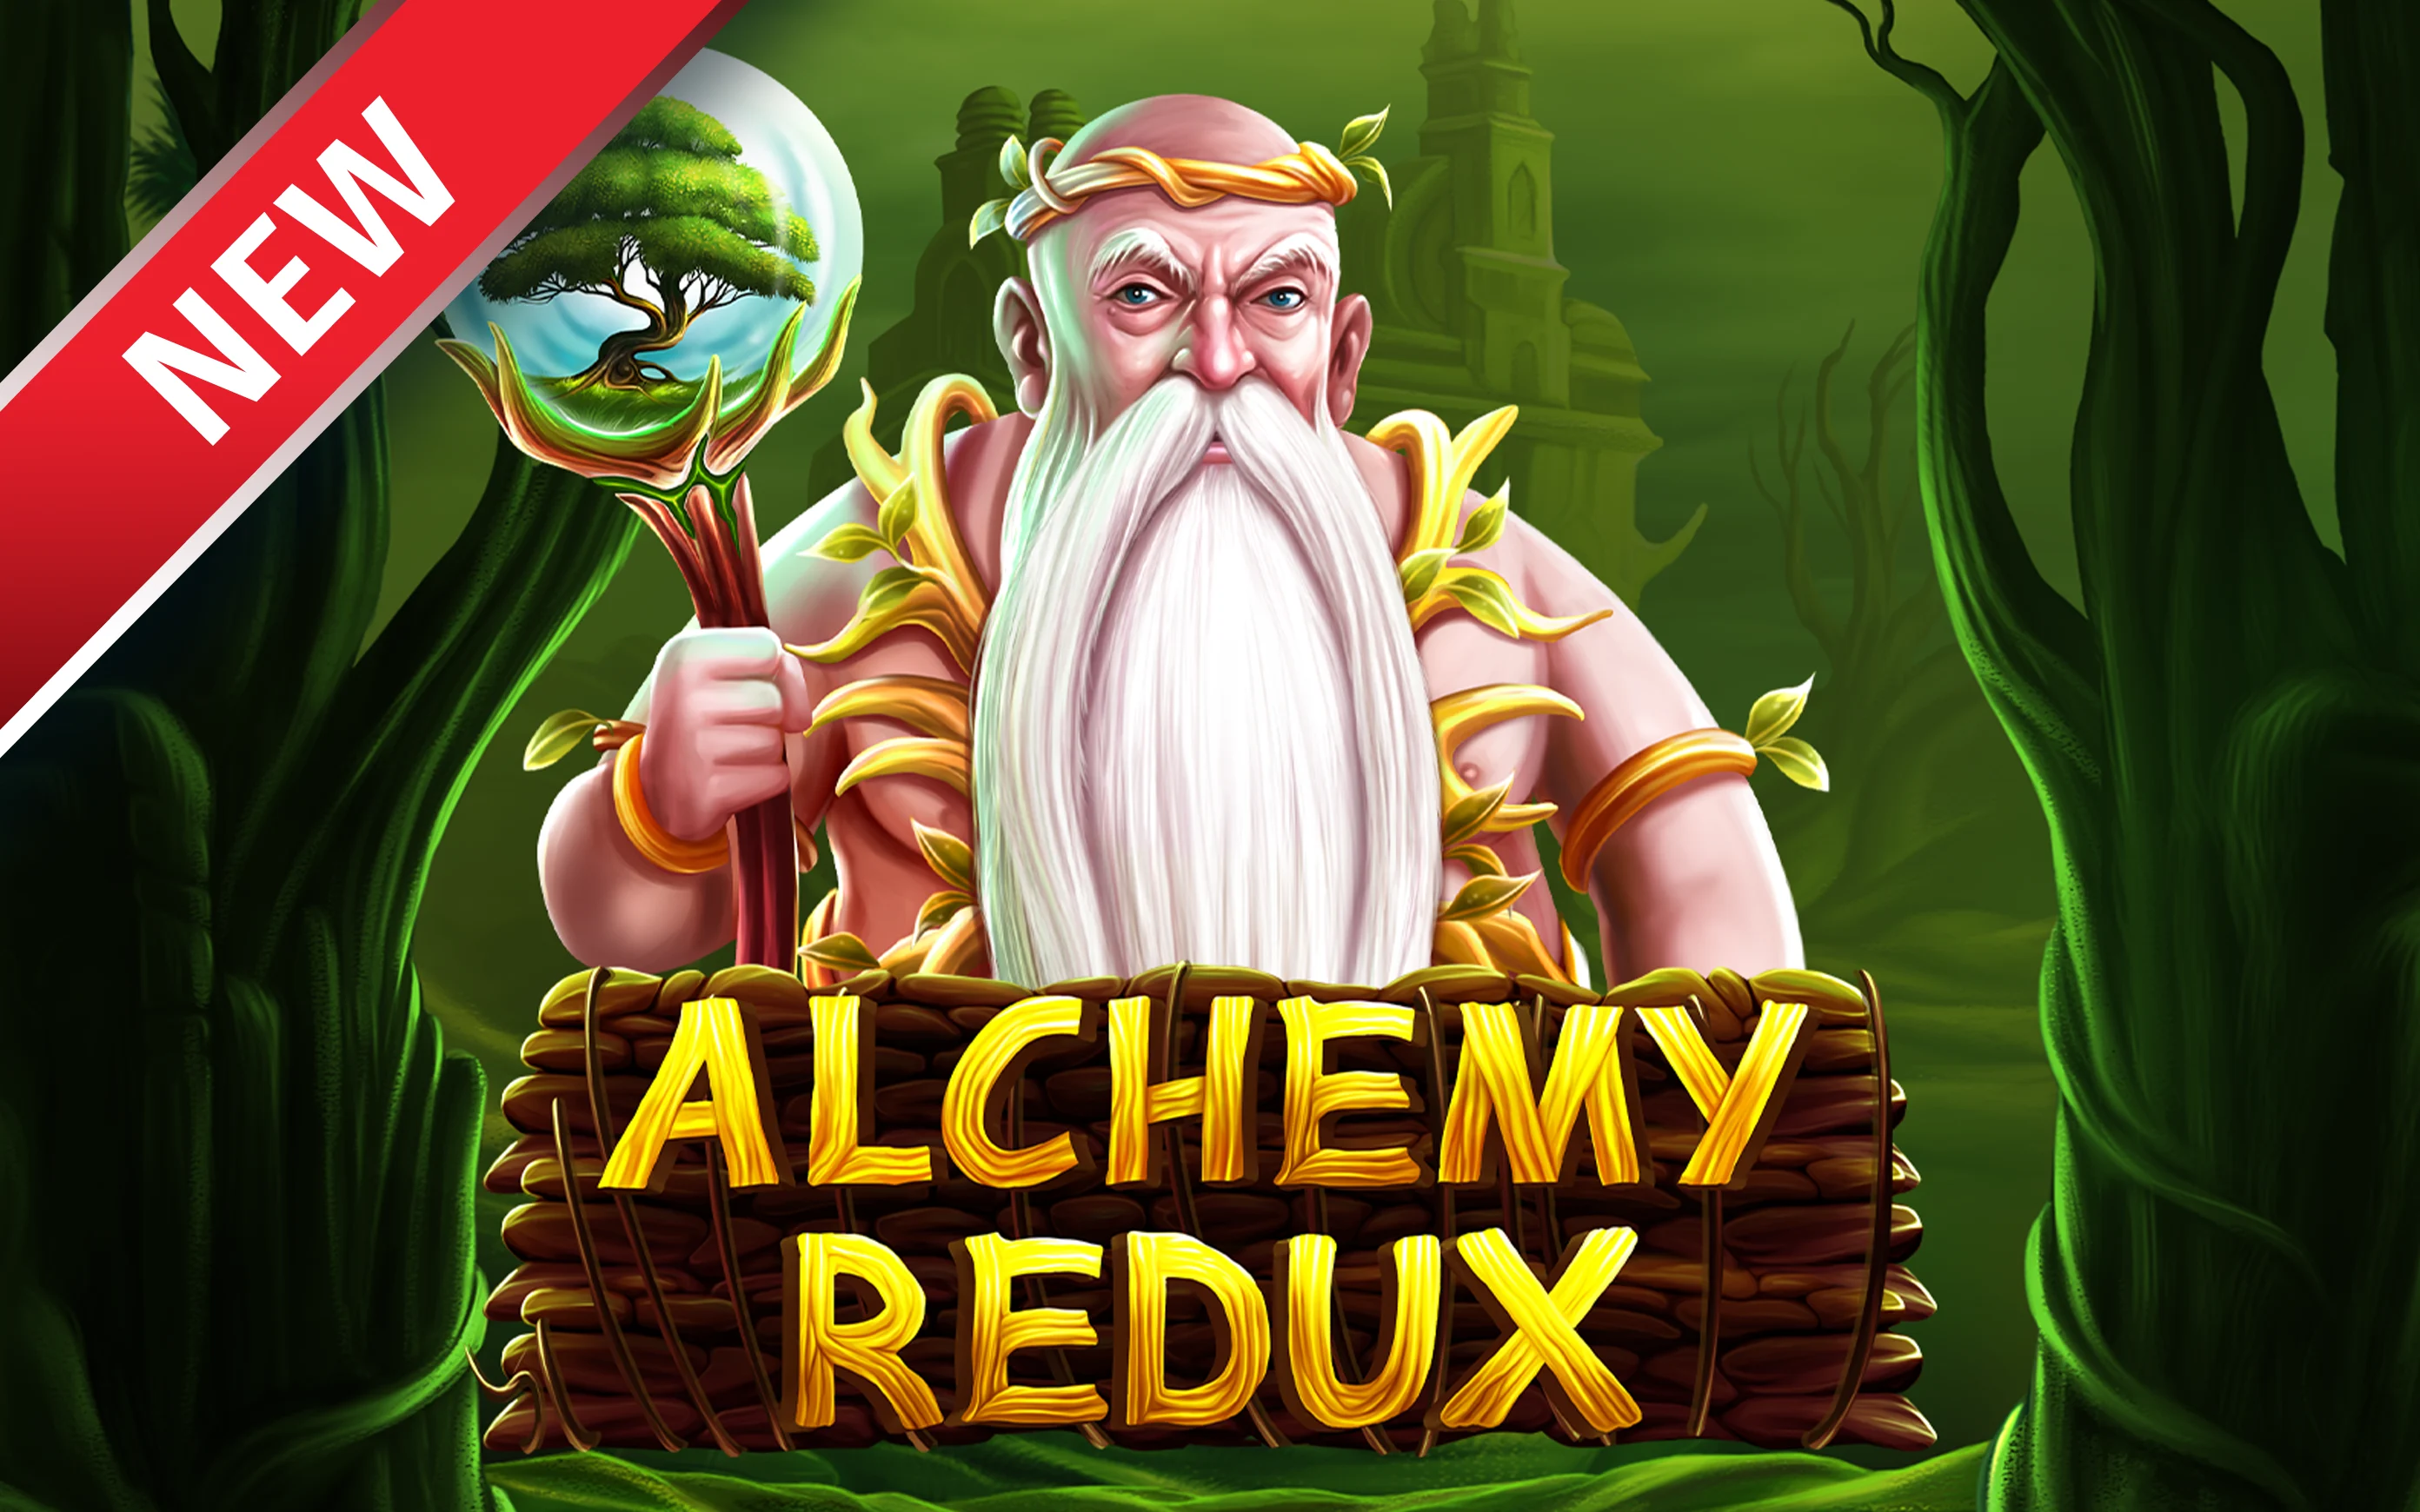 Play Alchemy Redux on Starcasino.be online casino